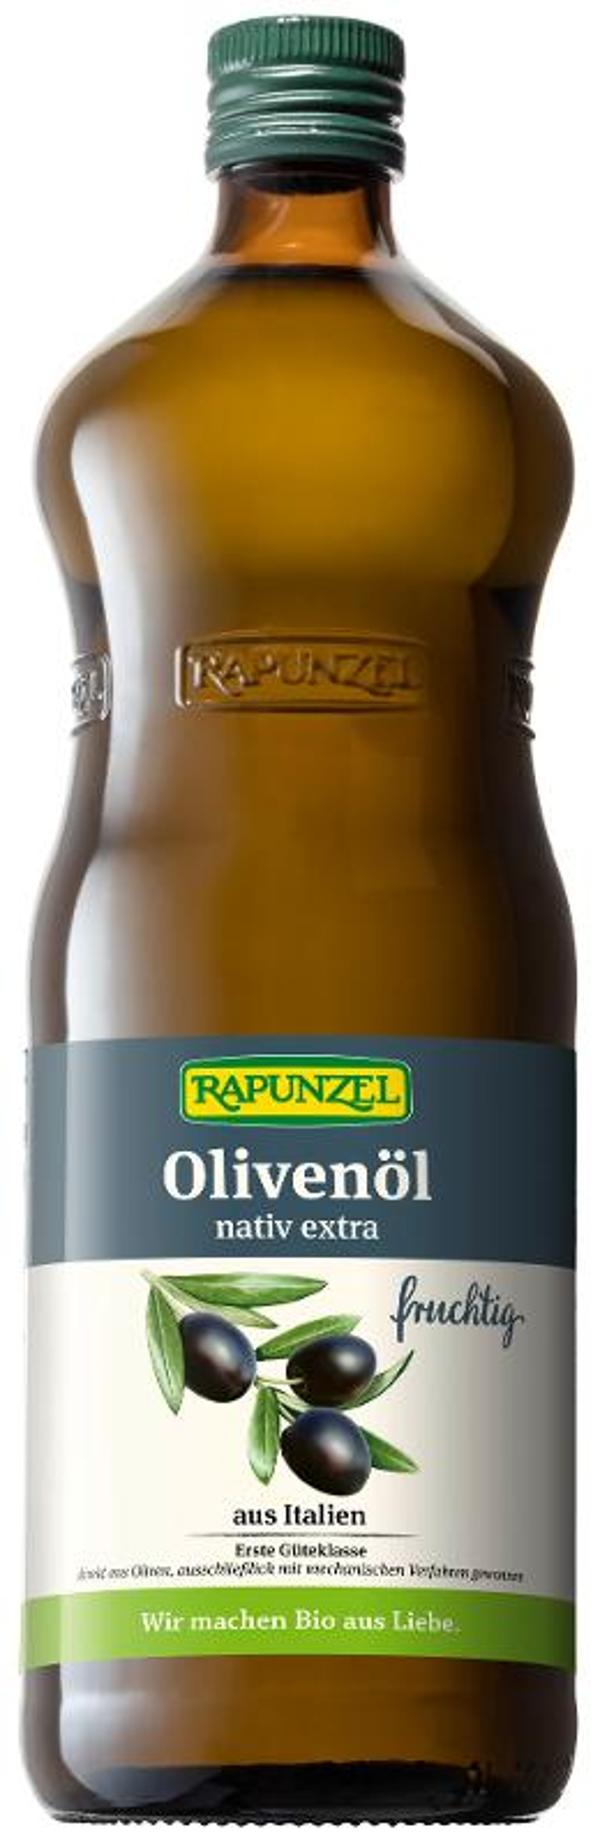 Produktfoto zu Olivenöl fruchtig 1 l Rapunzel